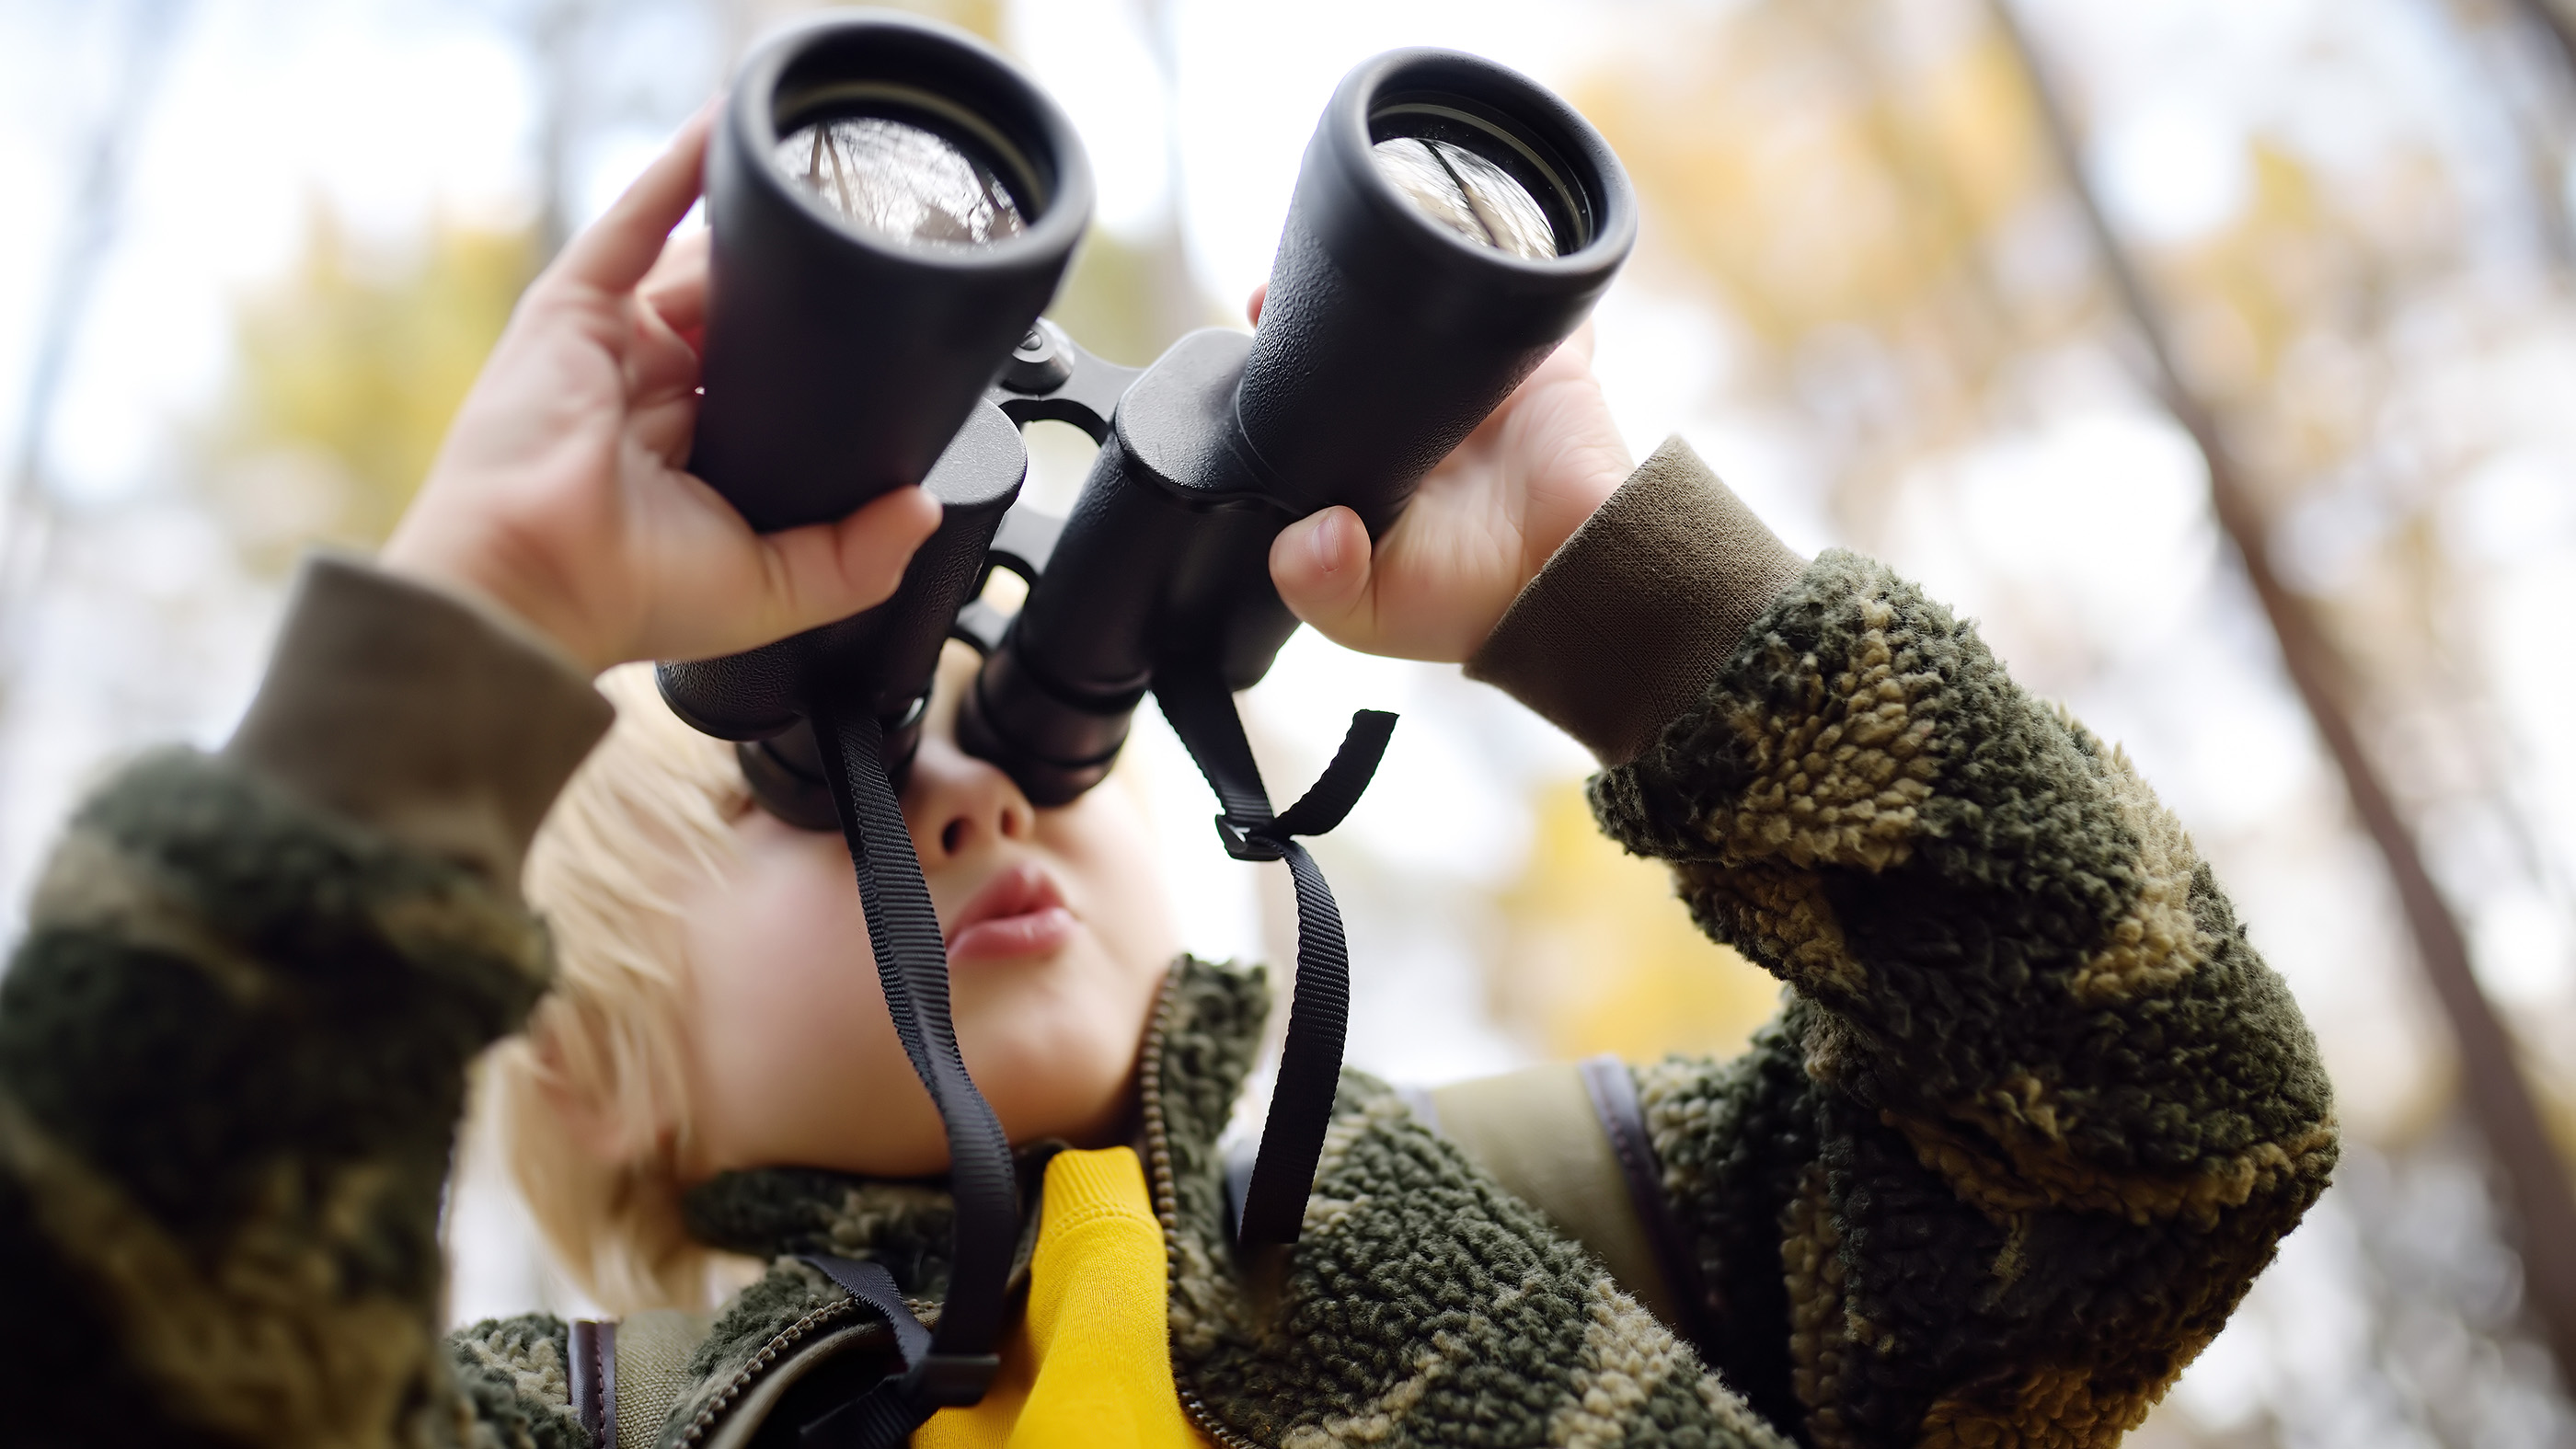 Detective Spy Compact Children Mini Telescope for Bird Watching Explorer Adventure Learning Education Camping Luwint High Powered 10x 22 Kids Binoculars 